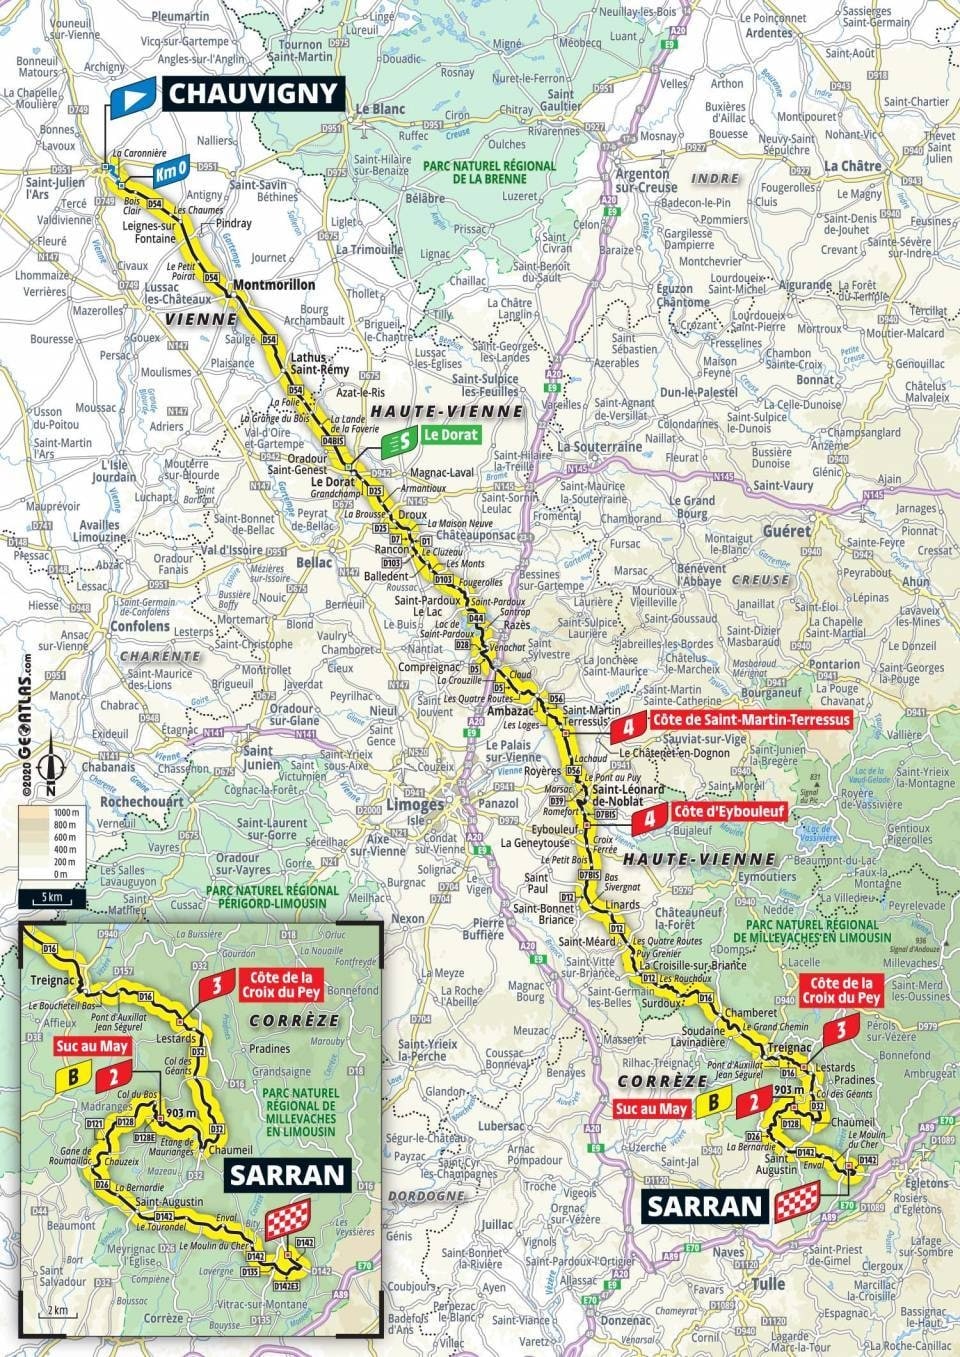 Tour de France 2020 - Planimetria Tappa 12